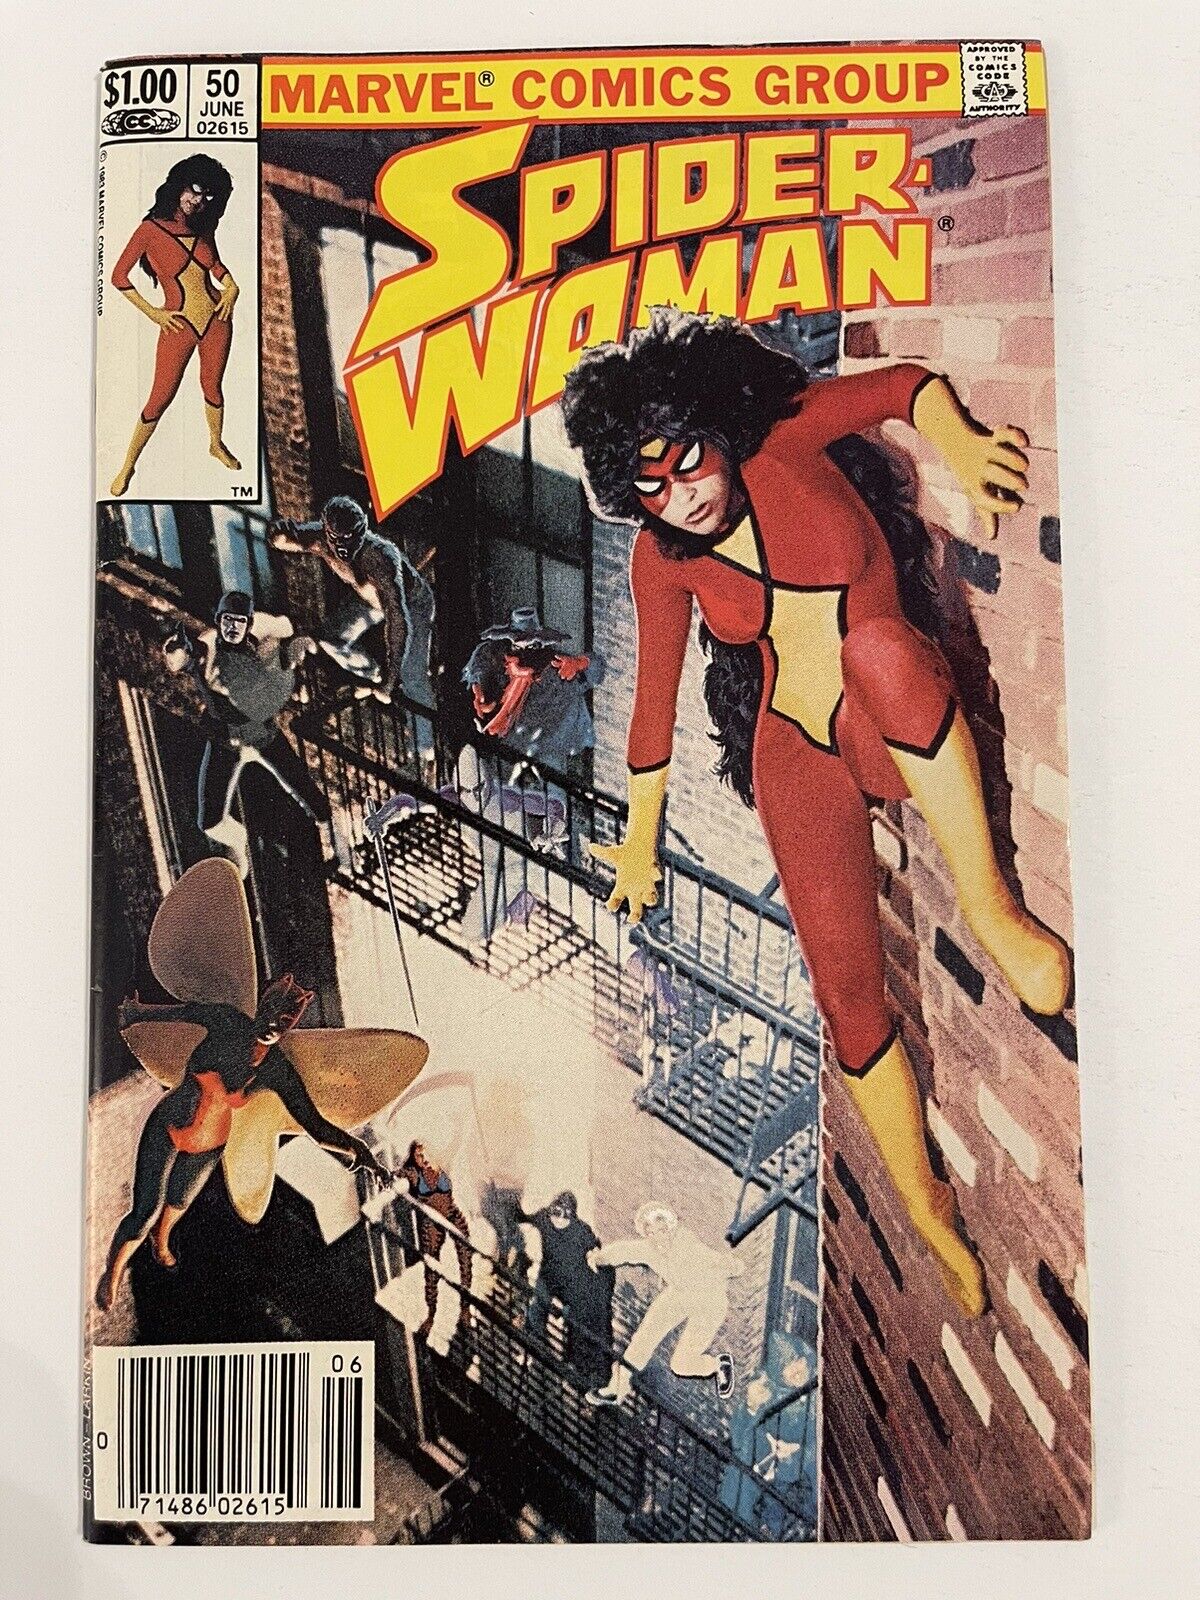 Spider-Woman #50, 1983 Bronze Age, Marvel Comics Group Comic Book